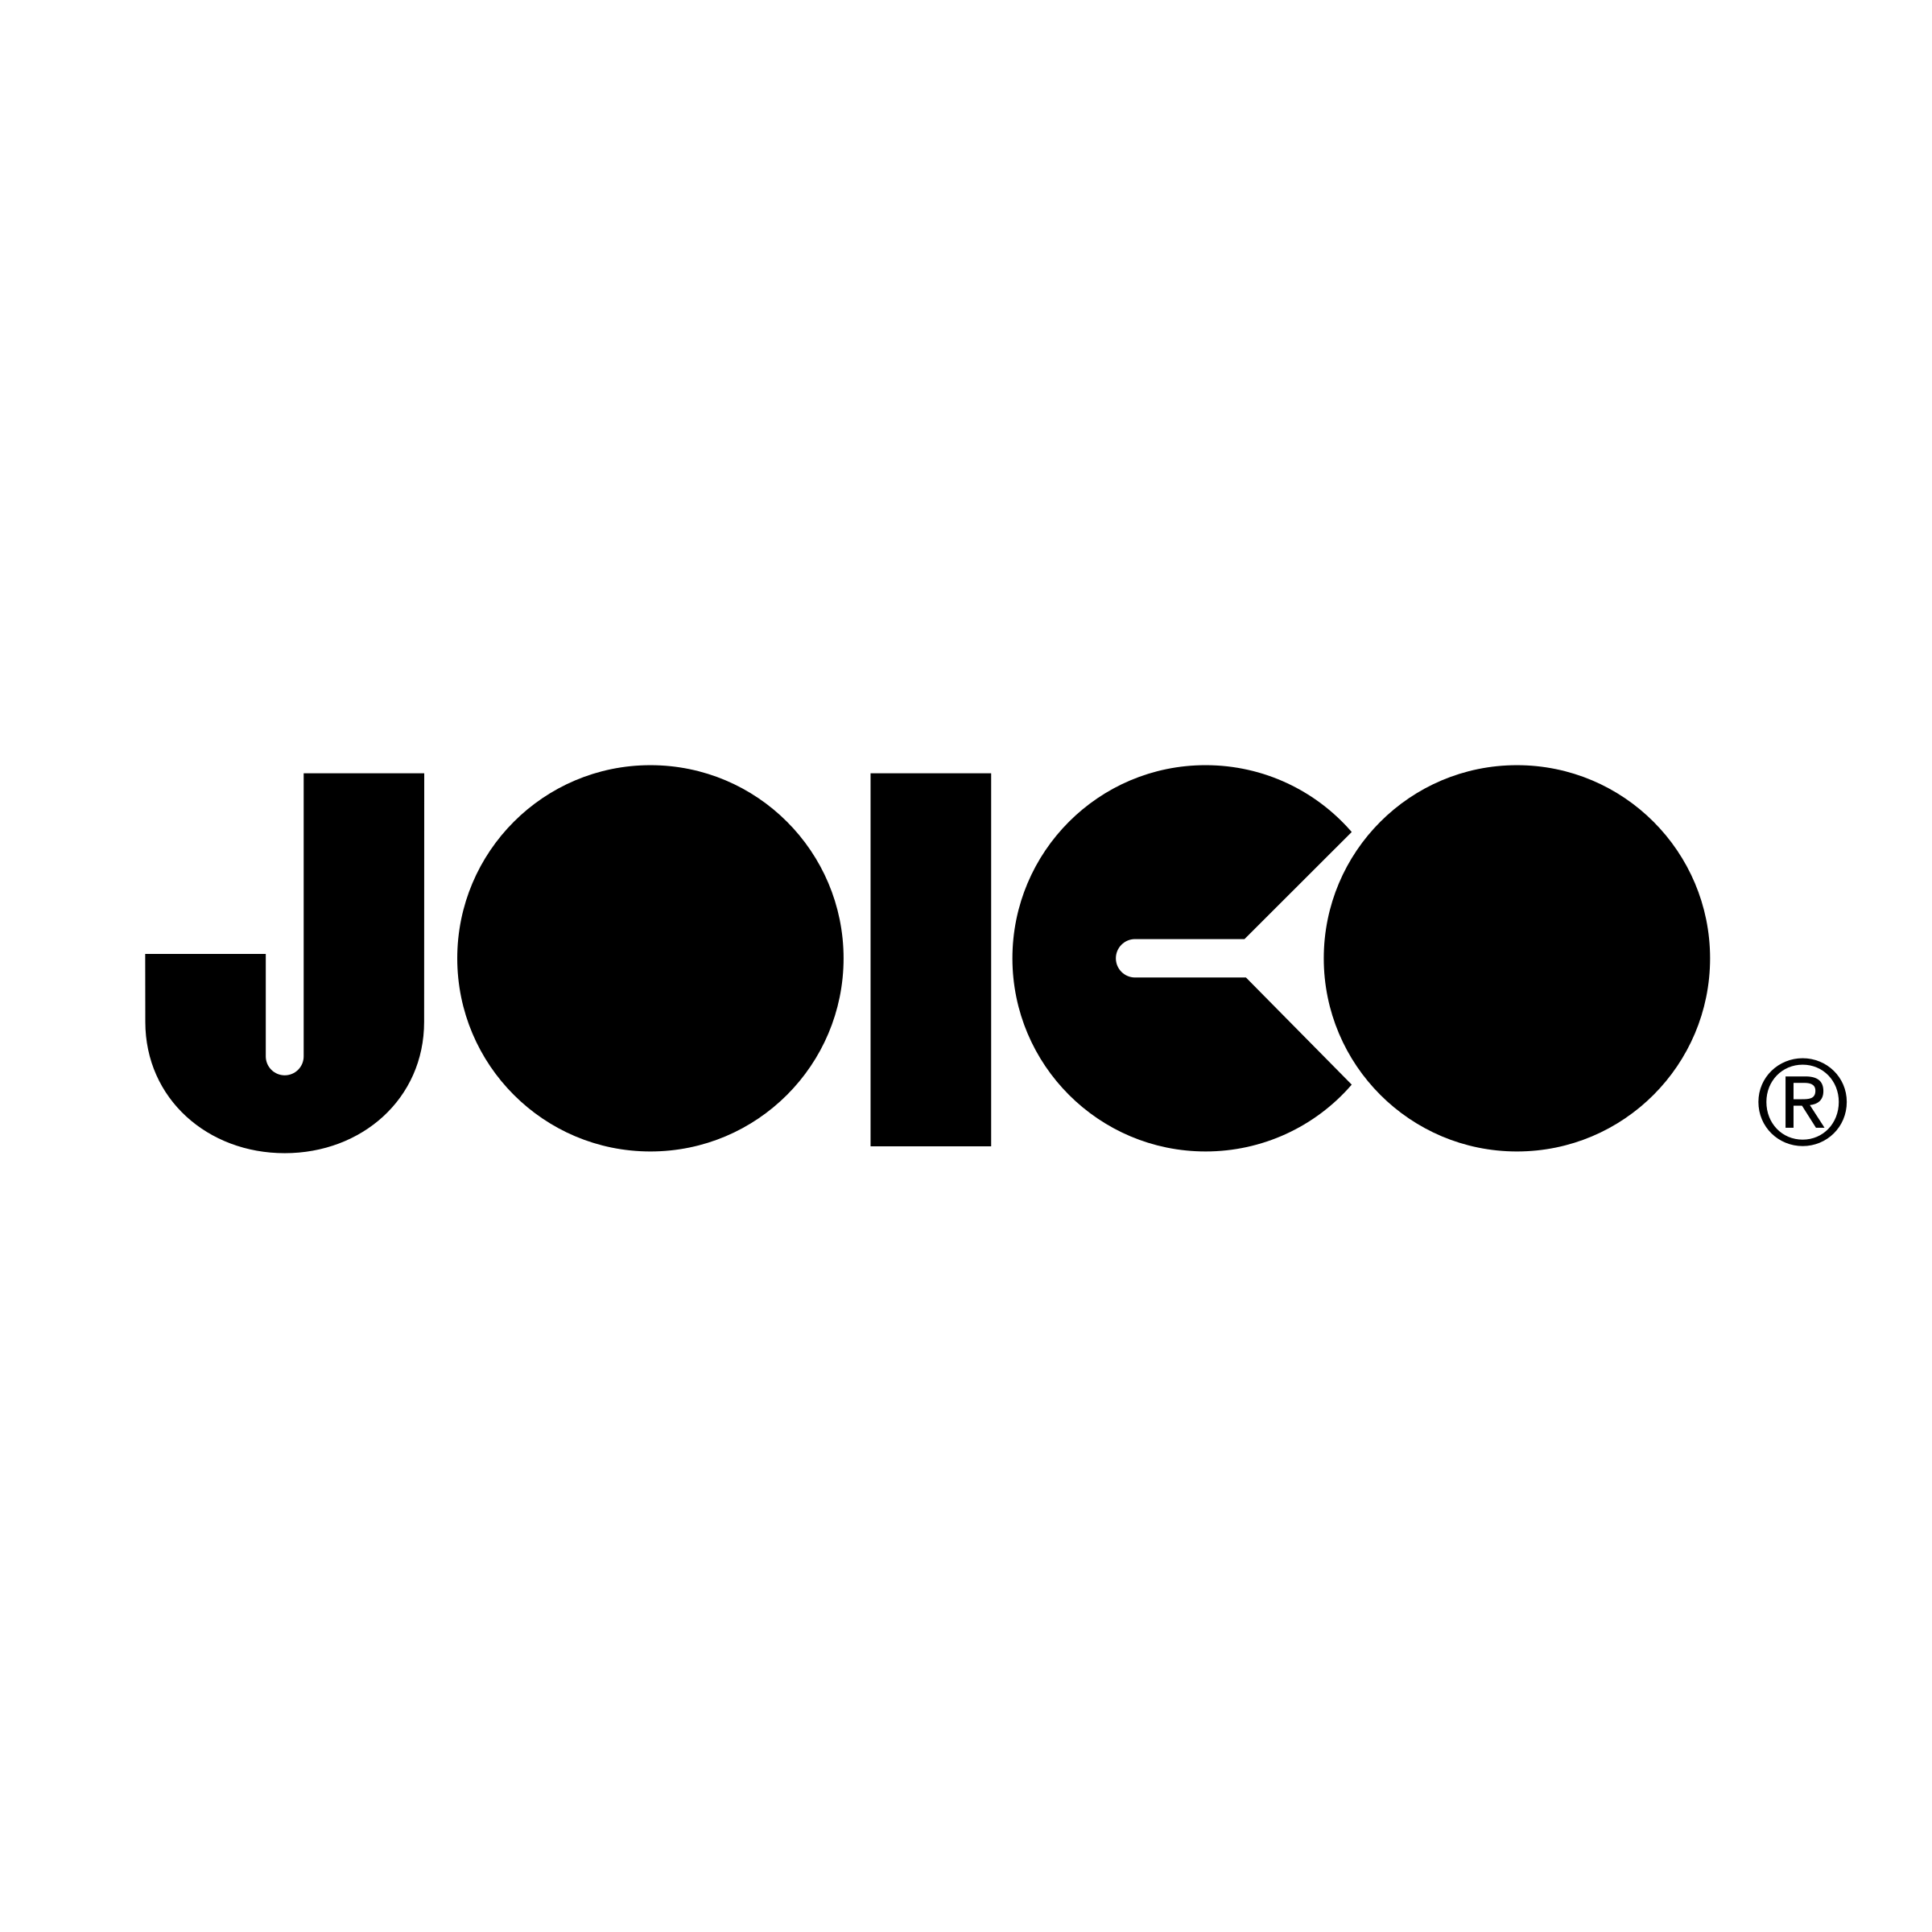 Joico Logo - Joico Logo PNG Transparent & SVG Vector - Freebie Supply